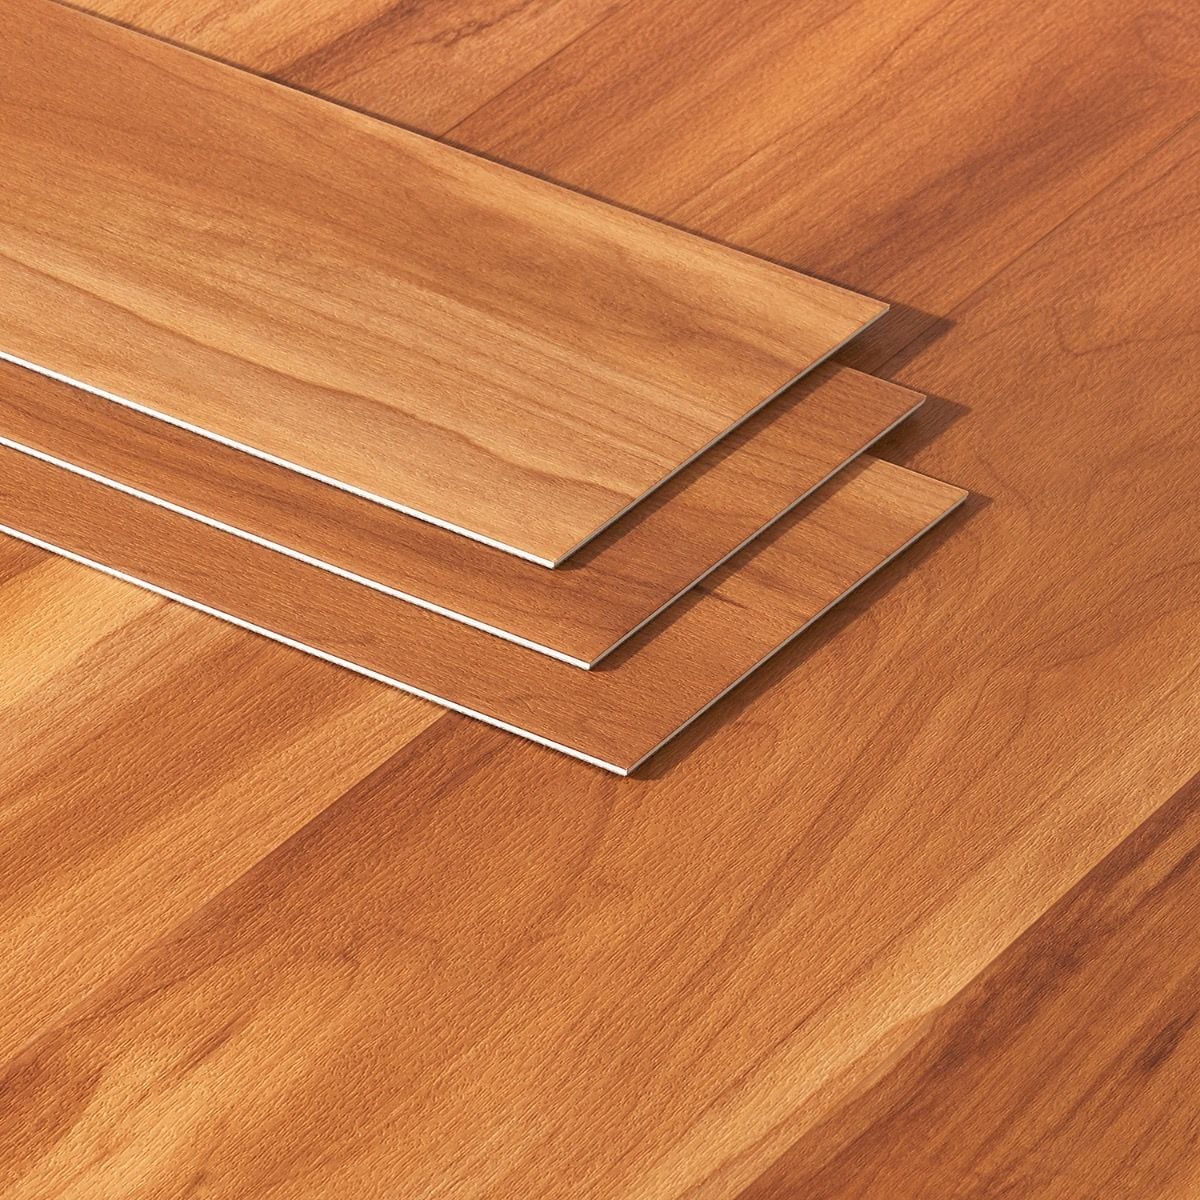 Artmore Tile Loseta Wood Look Maple 6, Wood Look Luxury Vinyl Plank Flooring